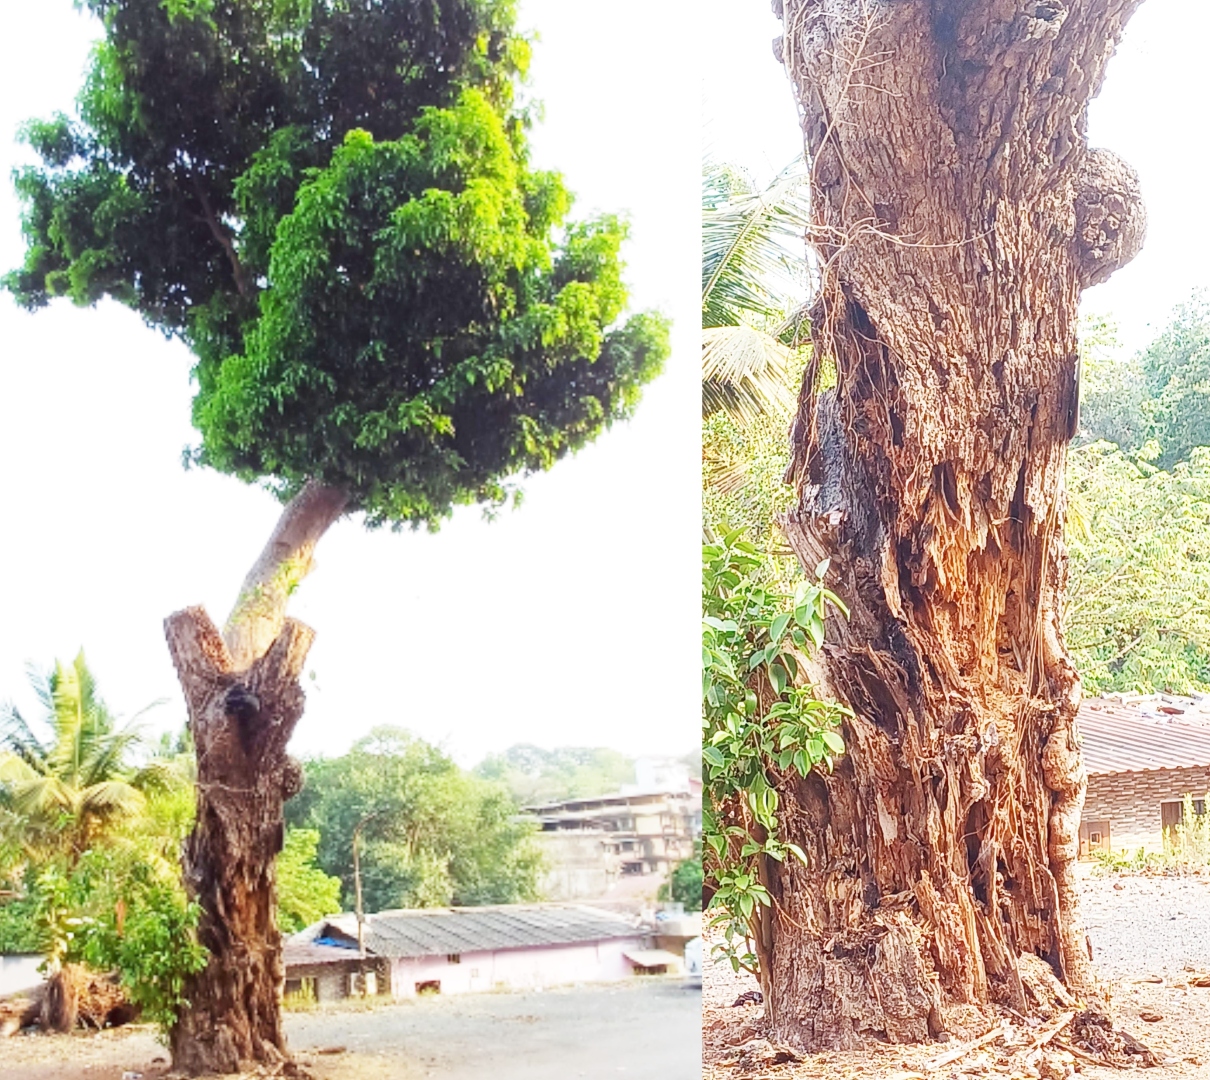 'Dangerously weak' mango tree still   stands tall on Pajifond road